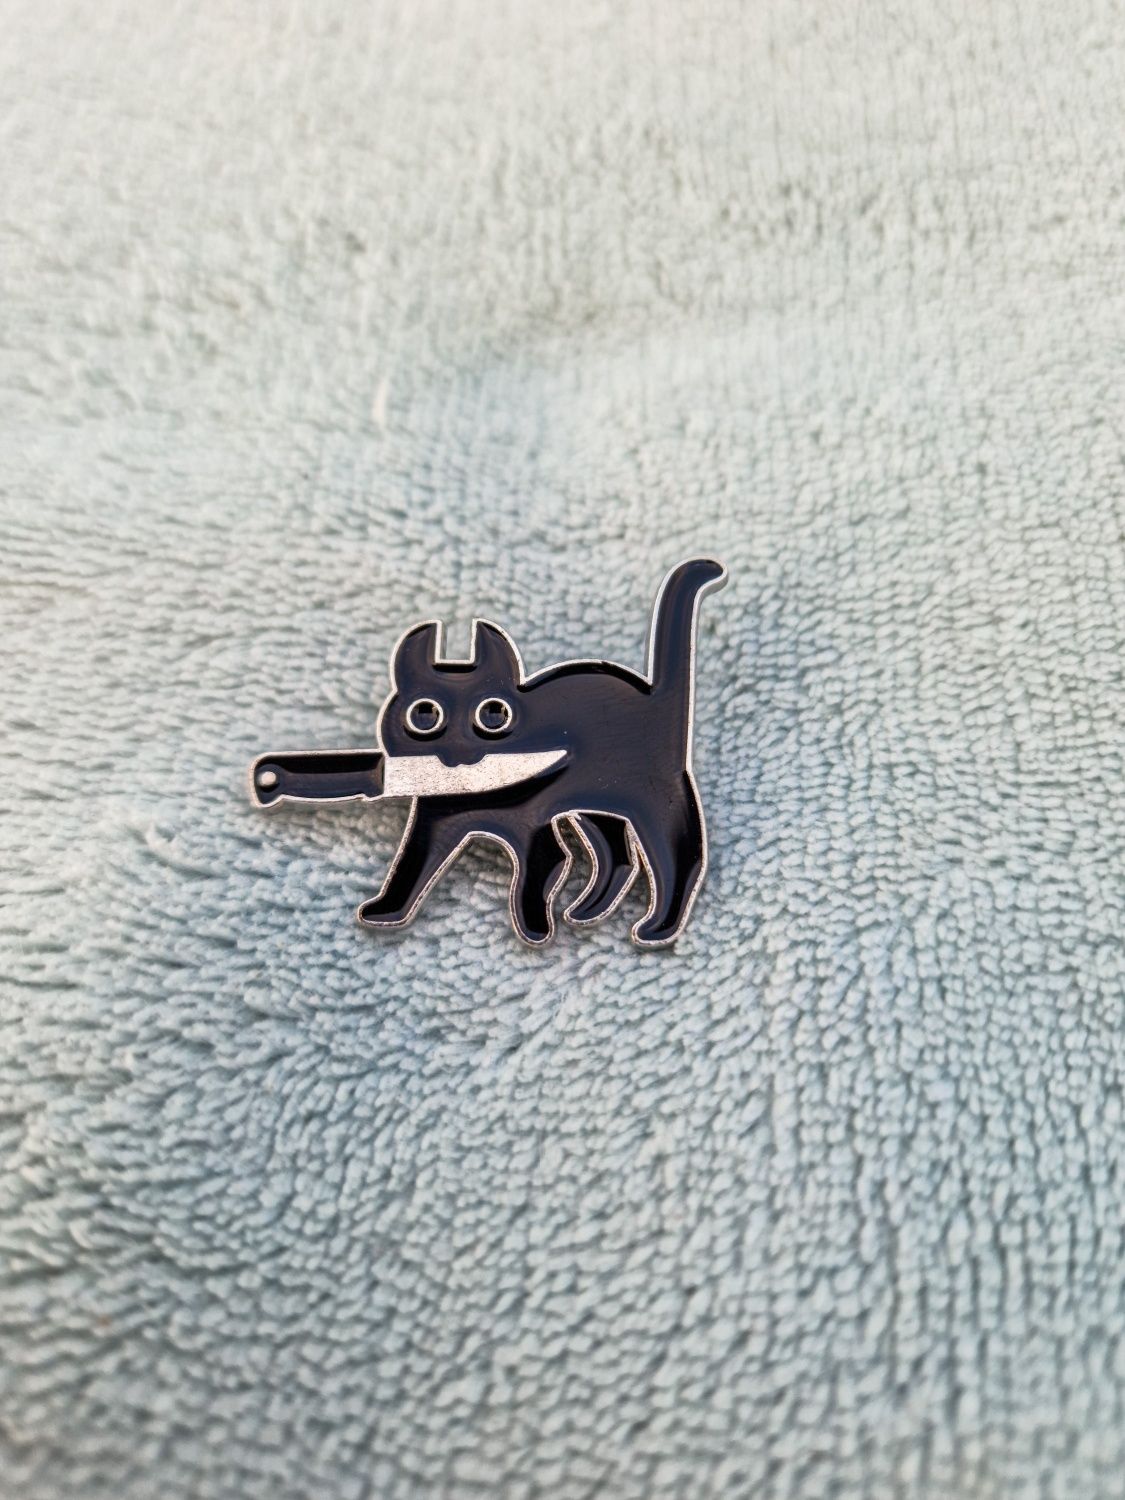 Przypinka pin wpinka broszka alternative kot
Cat halloween gothic